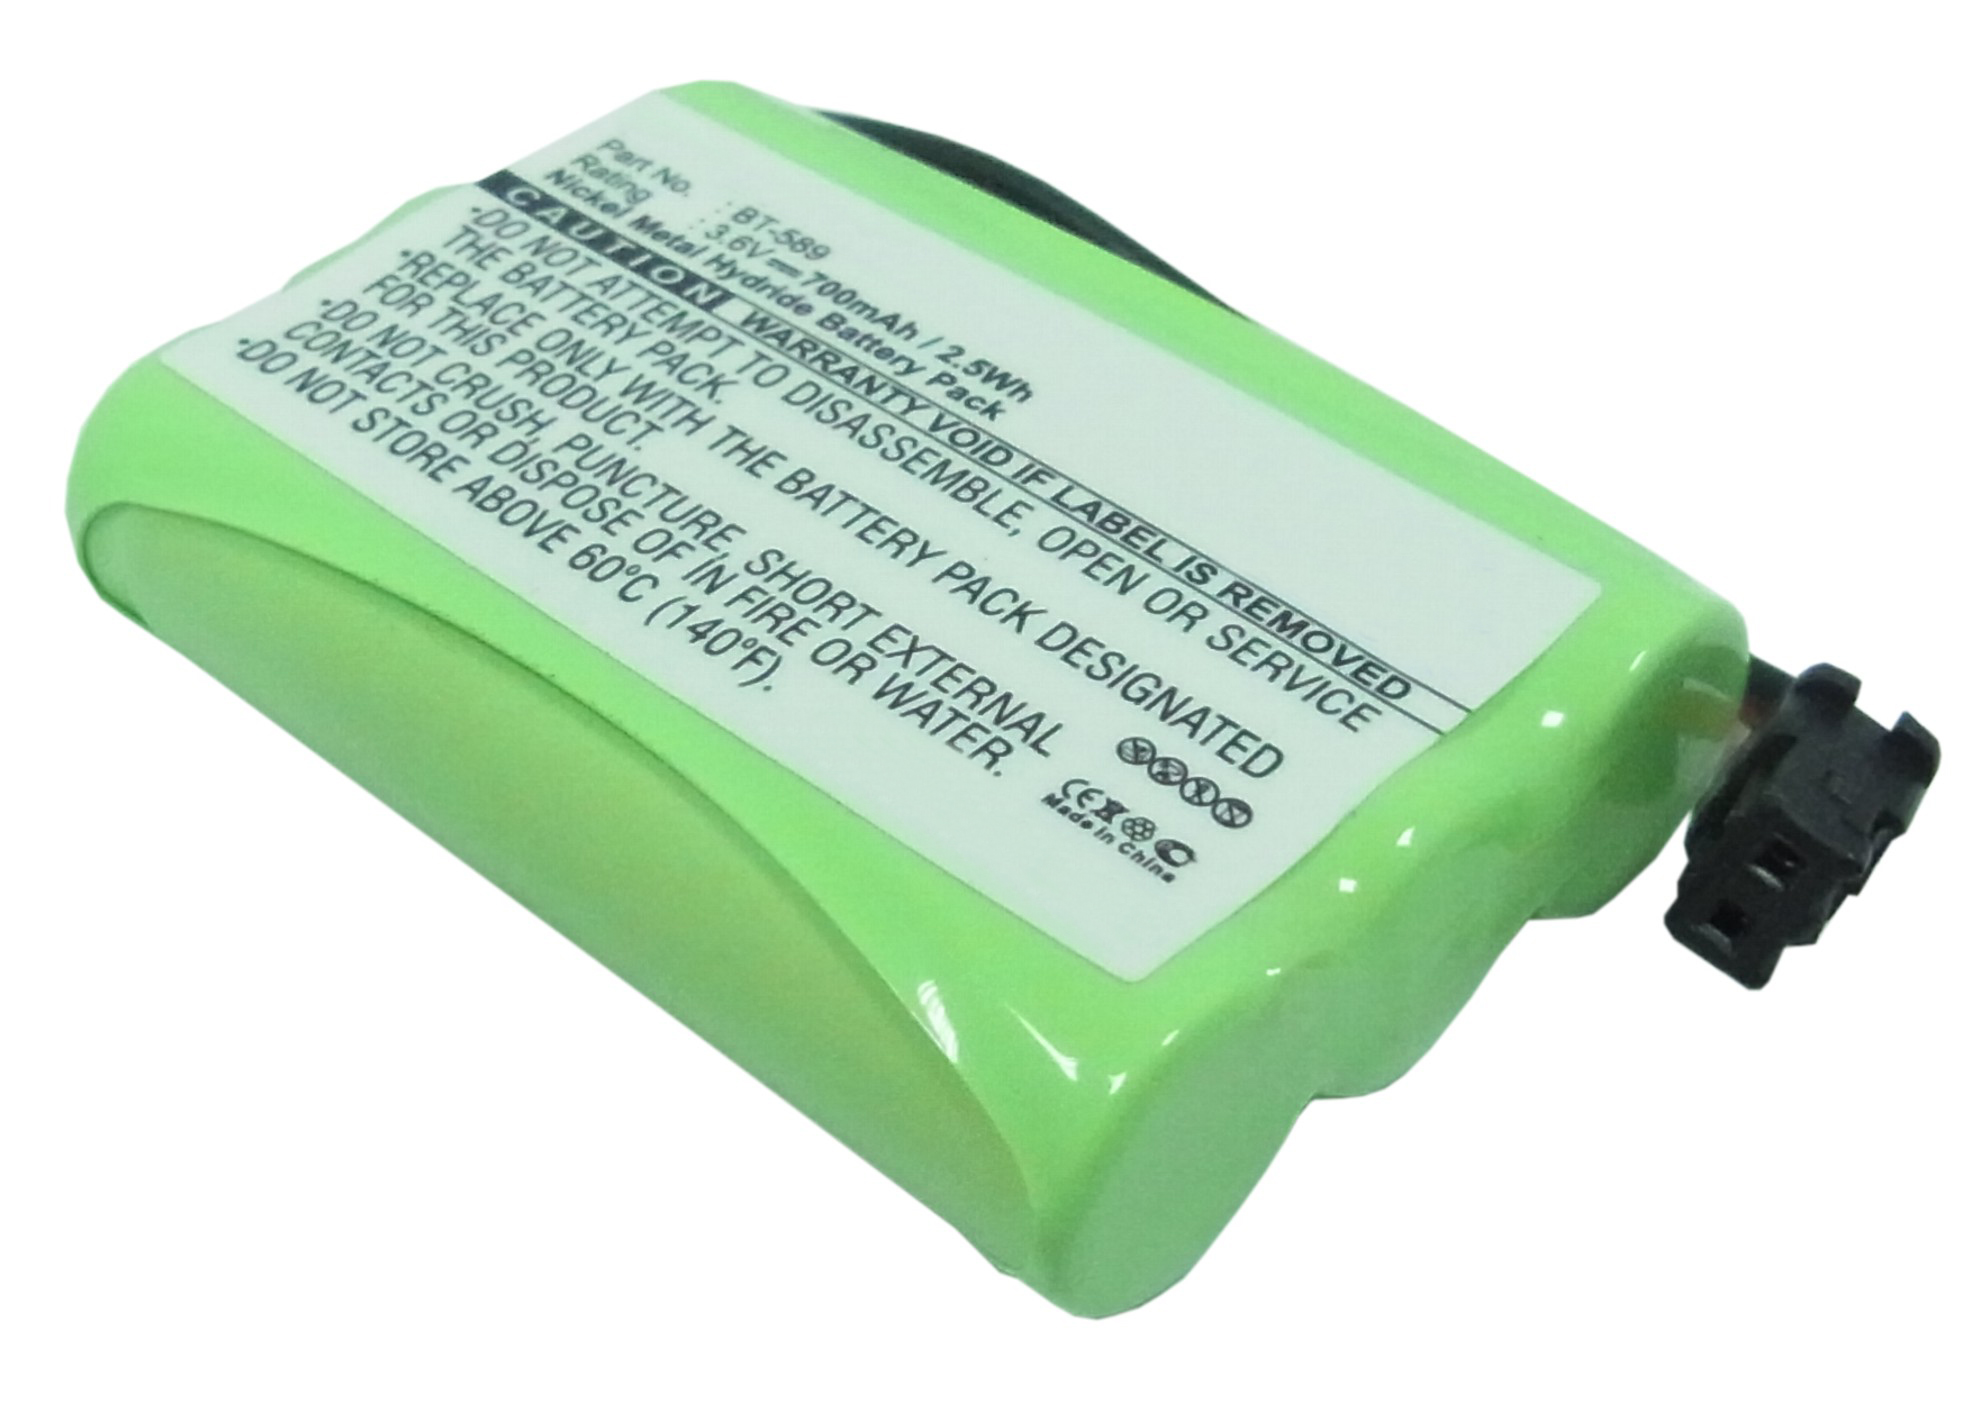 Synergy Digital Cordless Phone Battery, Compatible with Hagenuk BT-589 Cordless Phone Battery (3.6V, Ni-MH, 700mAh)